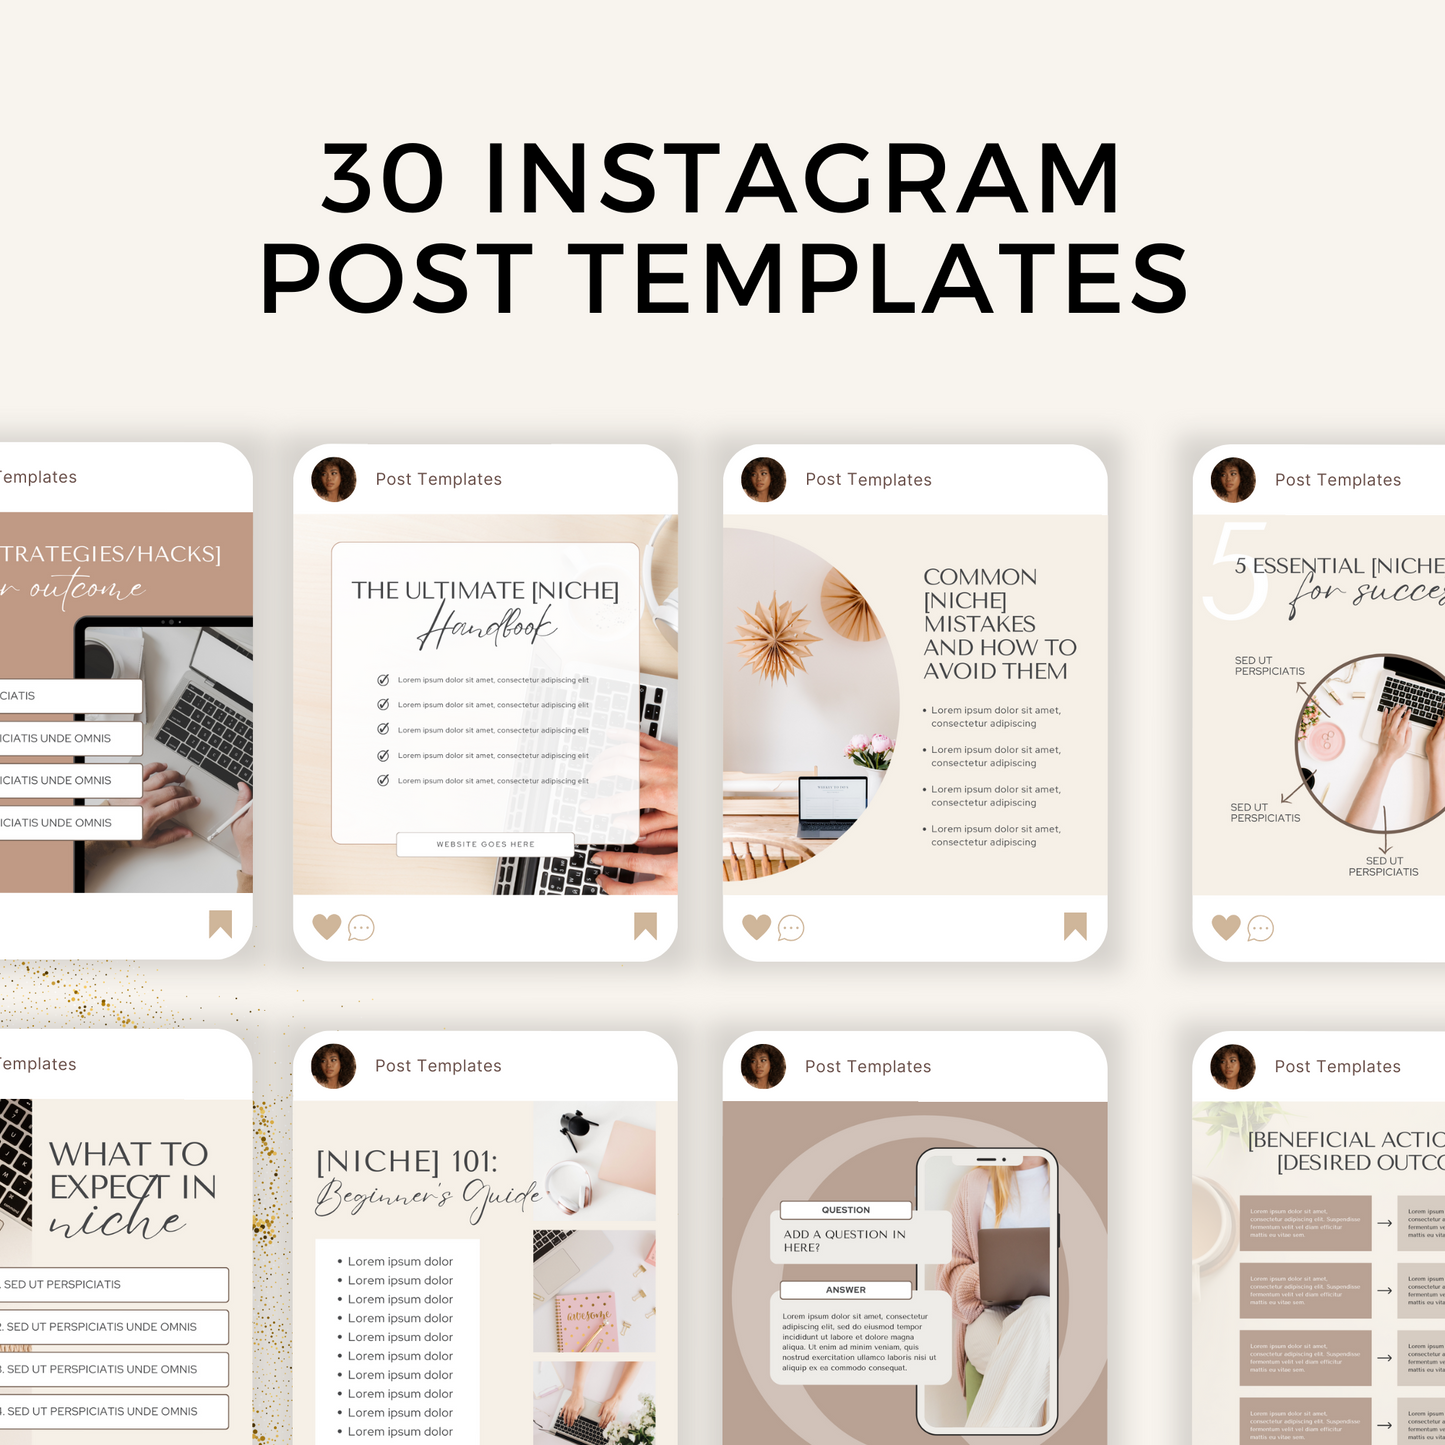 30 Instagram Post Templates for Business (PLR) – The BossUp PLR Shop